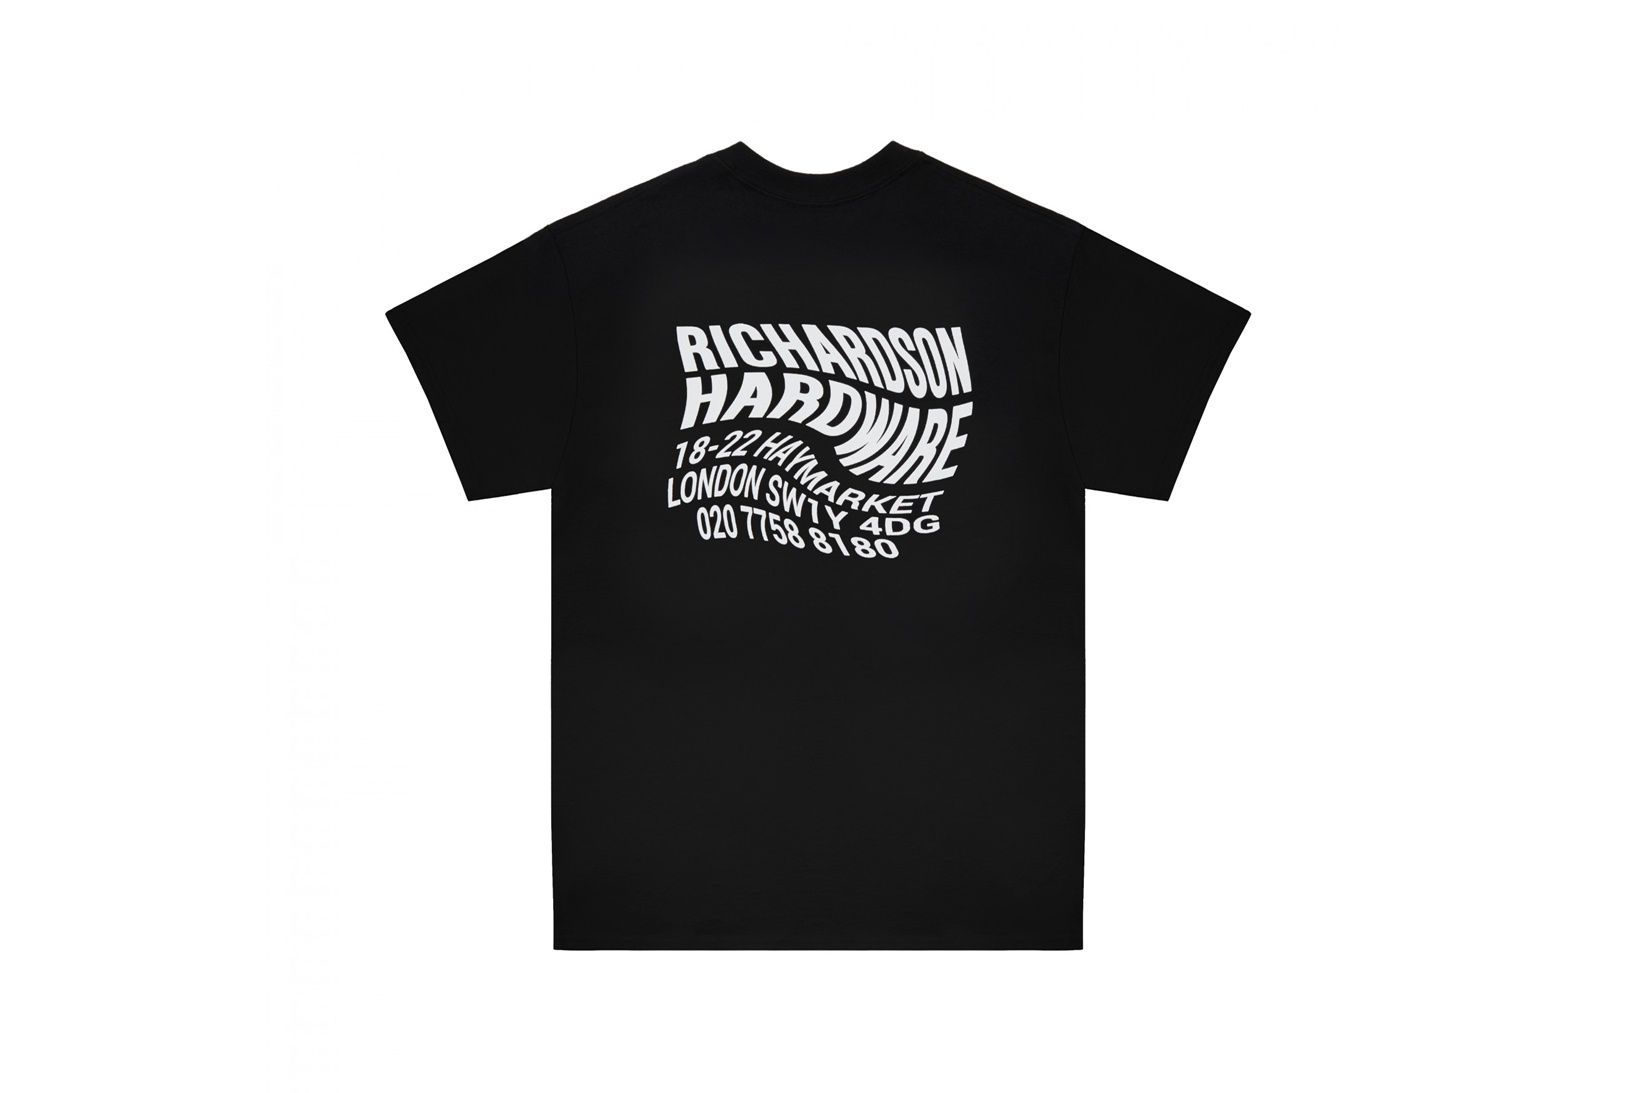 Dover Street Market London x ‘Richardson’ T-Shirt